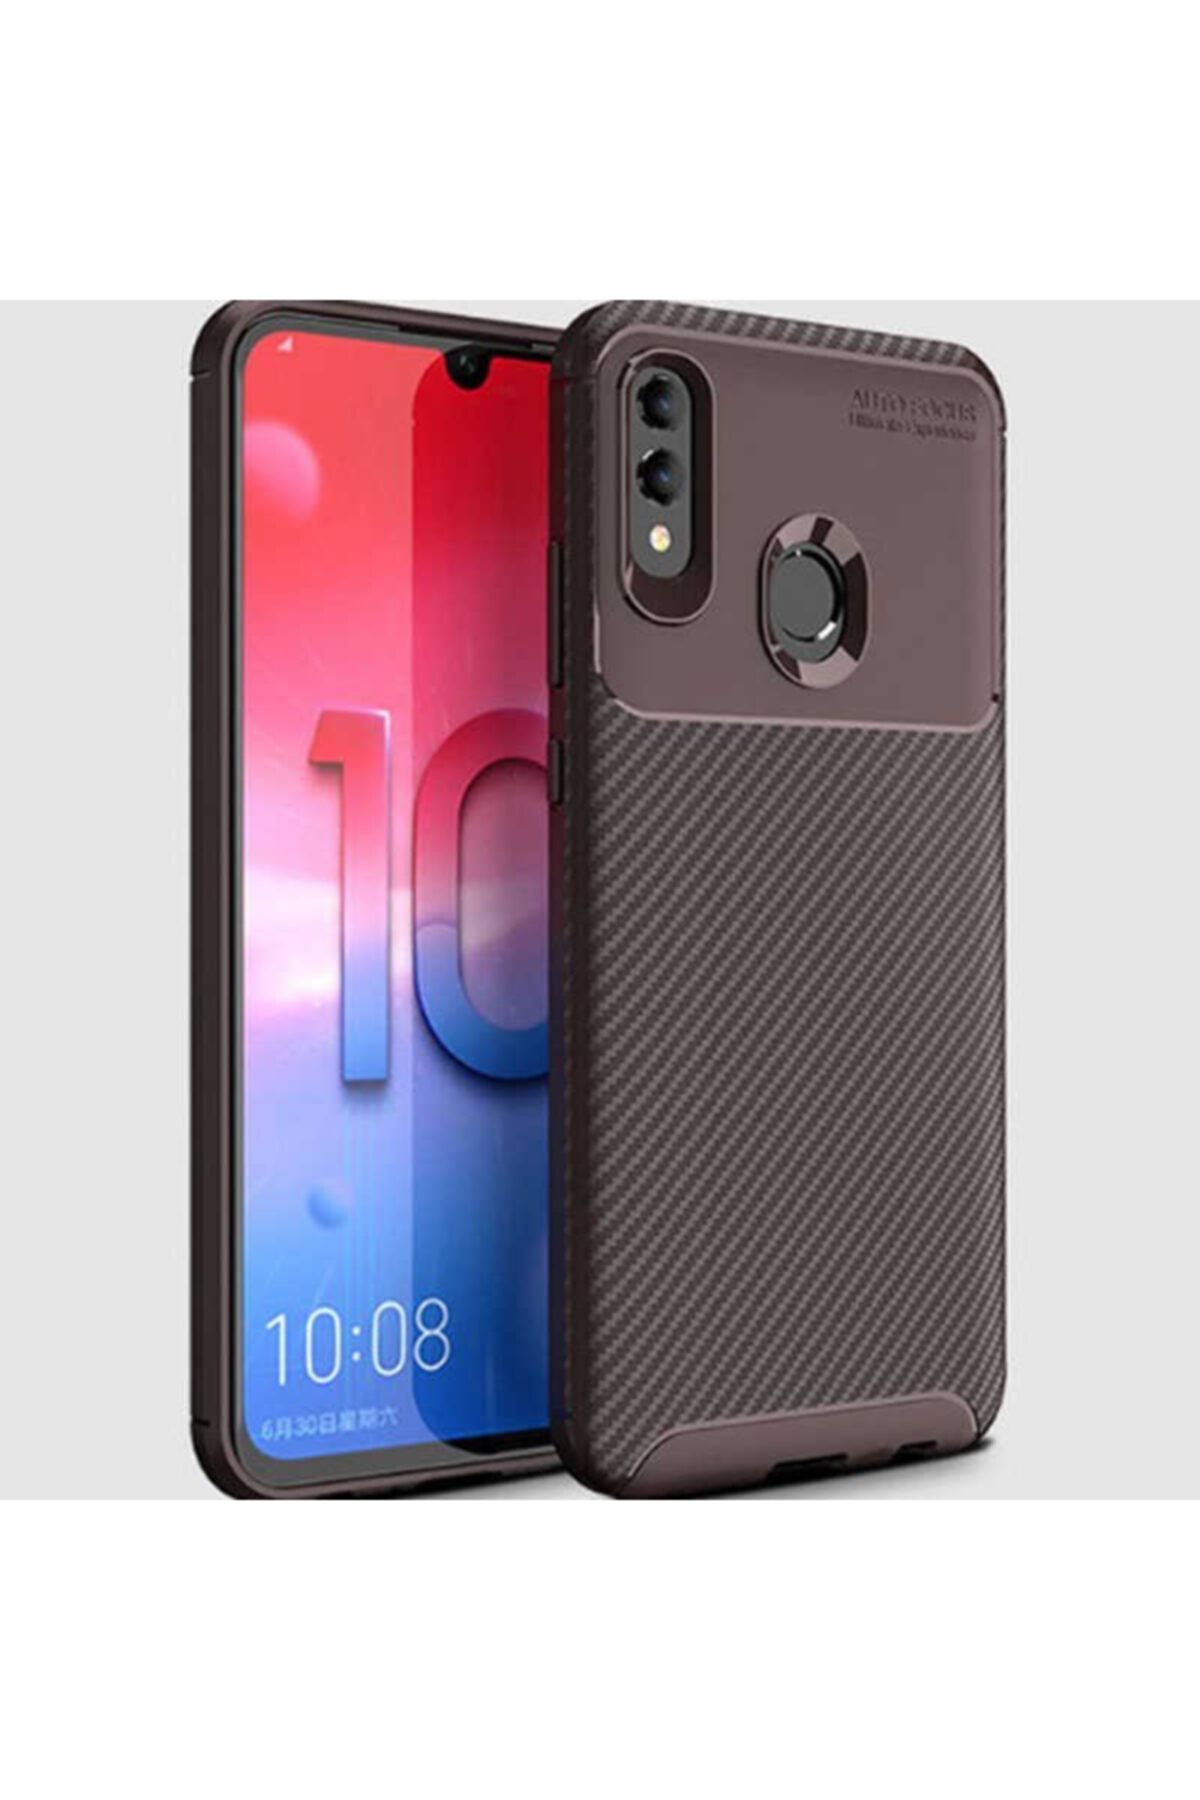 İncisoft Huawei P Smart 2019 Uyumlu Slim Fit Esnek Fiber Karbon Tasarım Kaymayan Silikon Kılıf Kapak